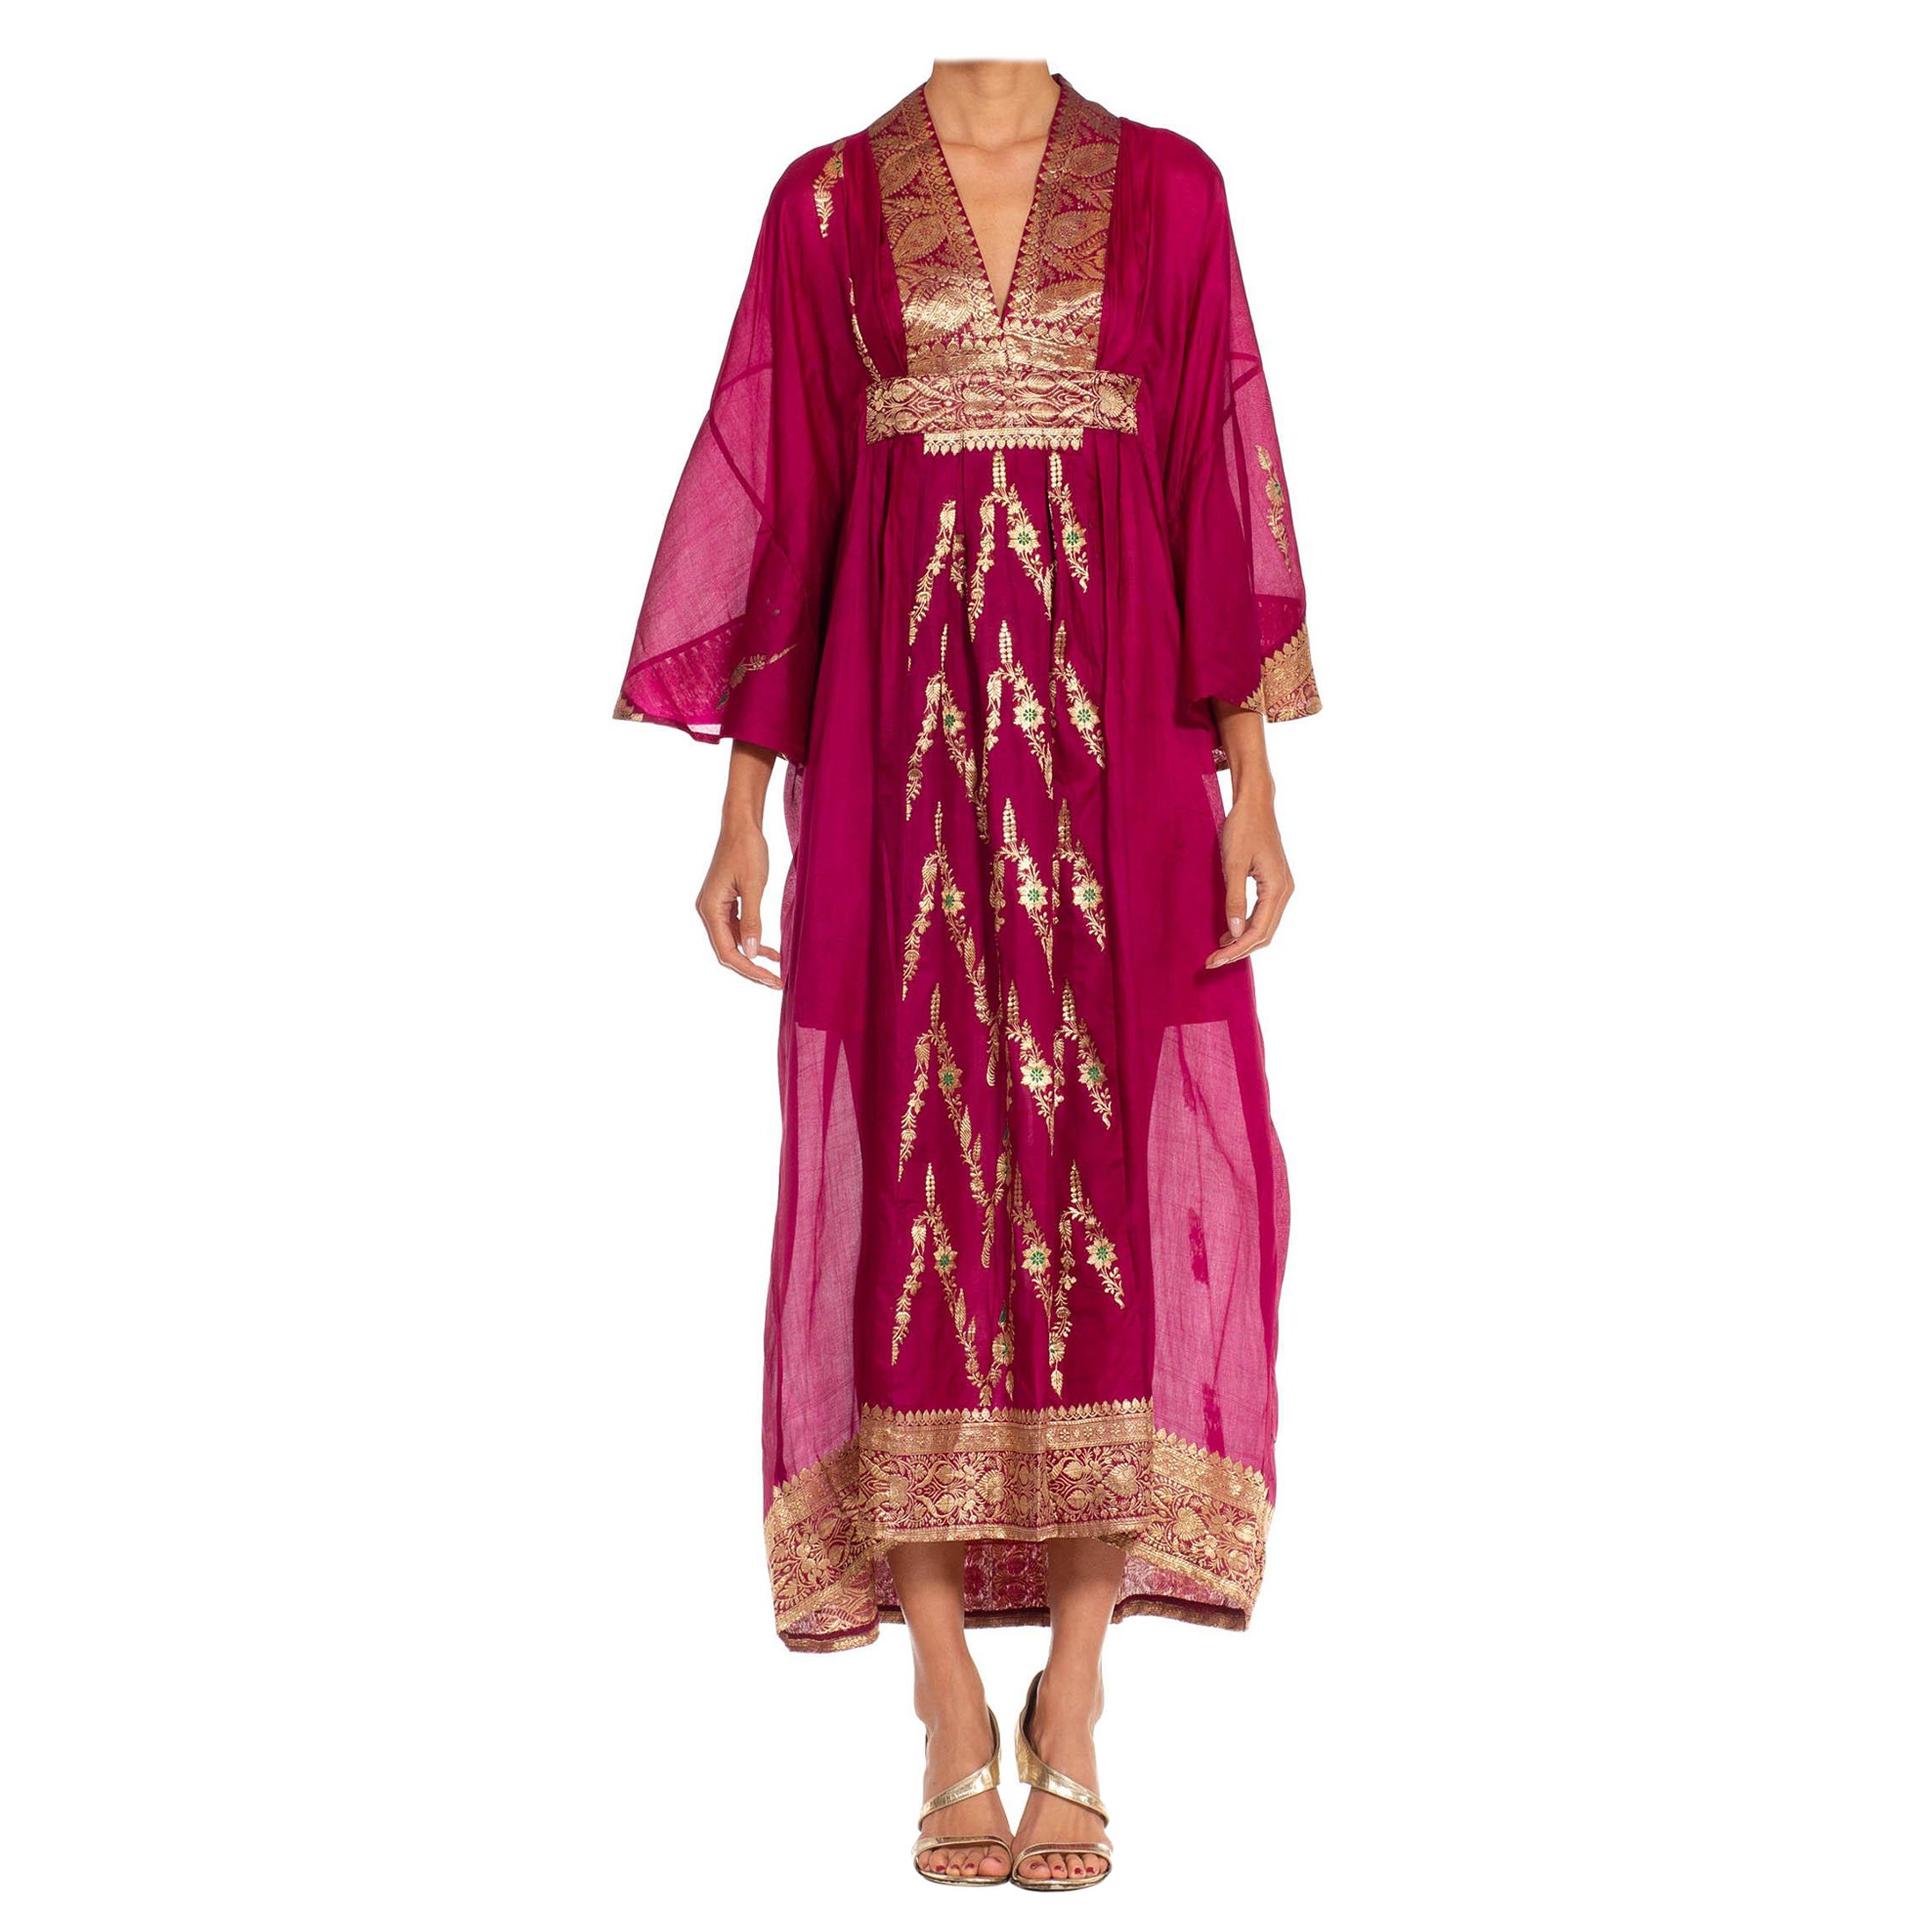 Morphew Collection Fuchsia & Gold Silk Kaftan Made From Vintage Saris